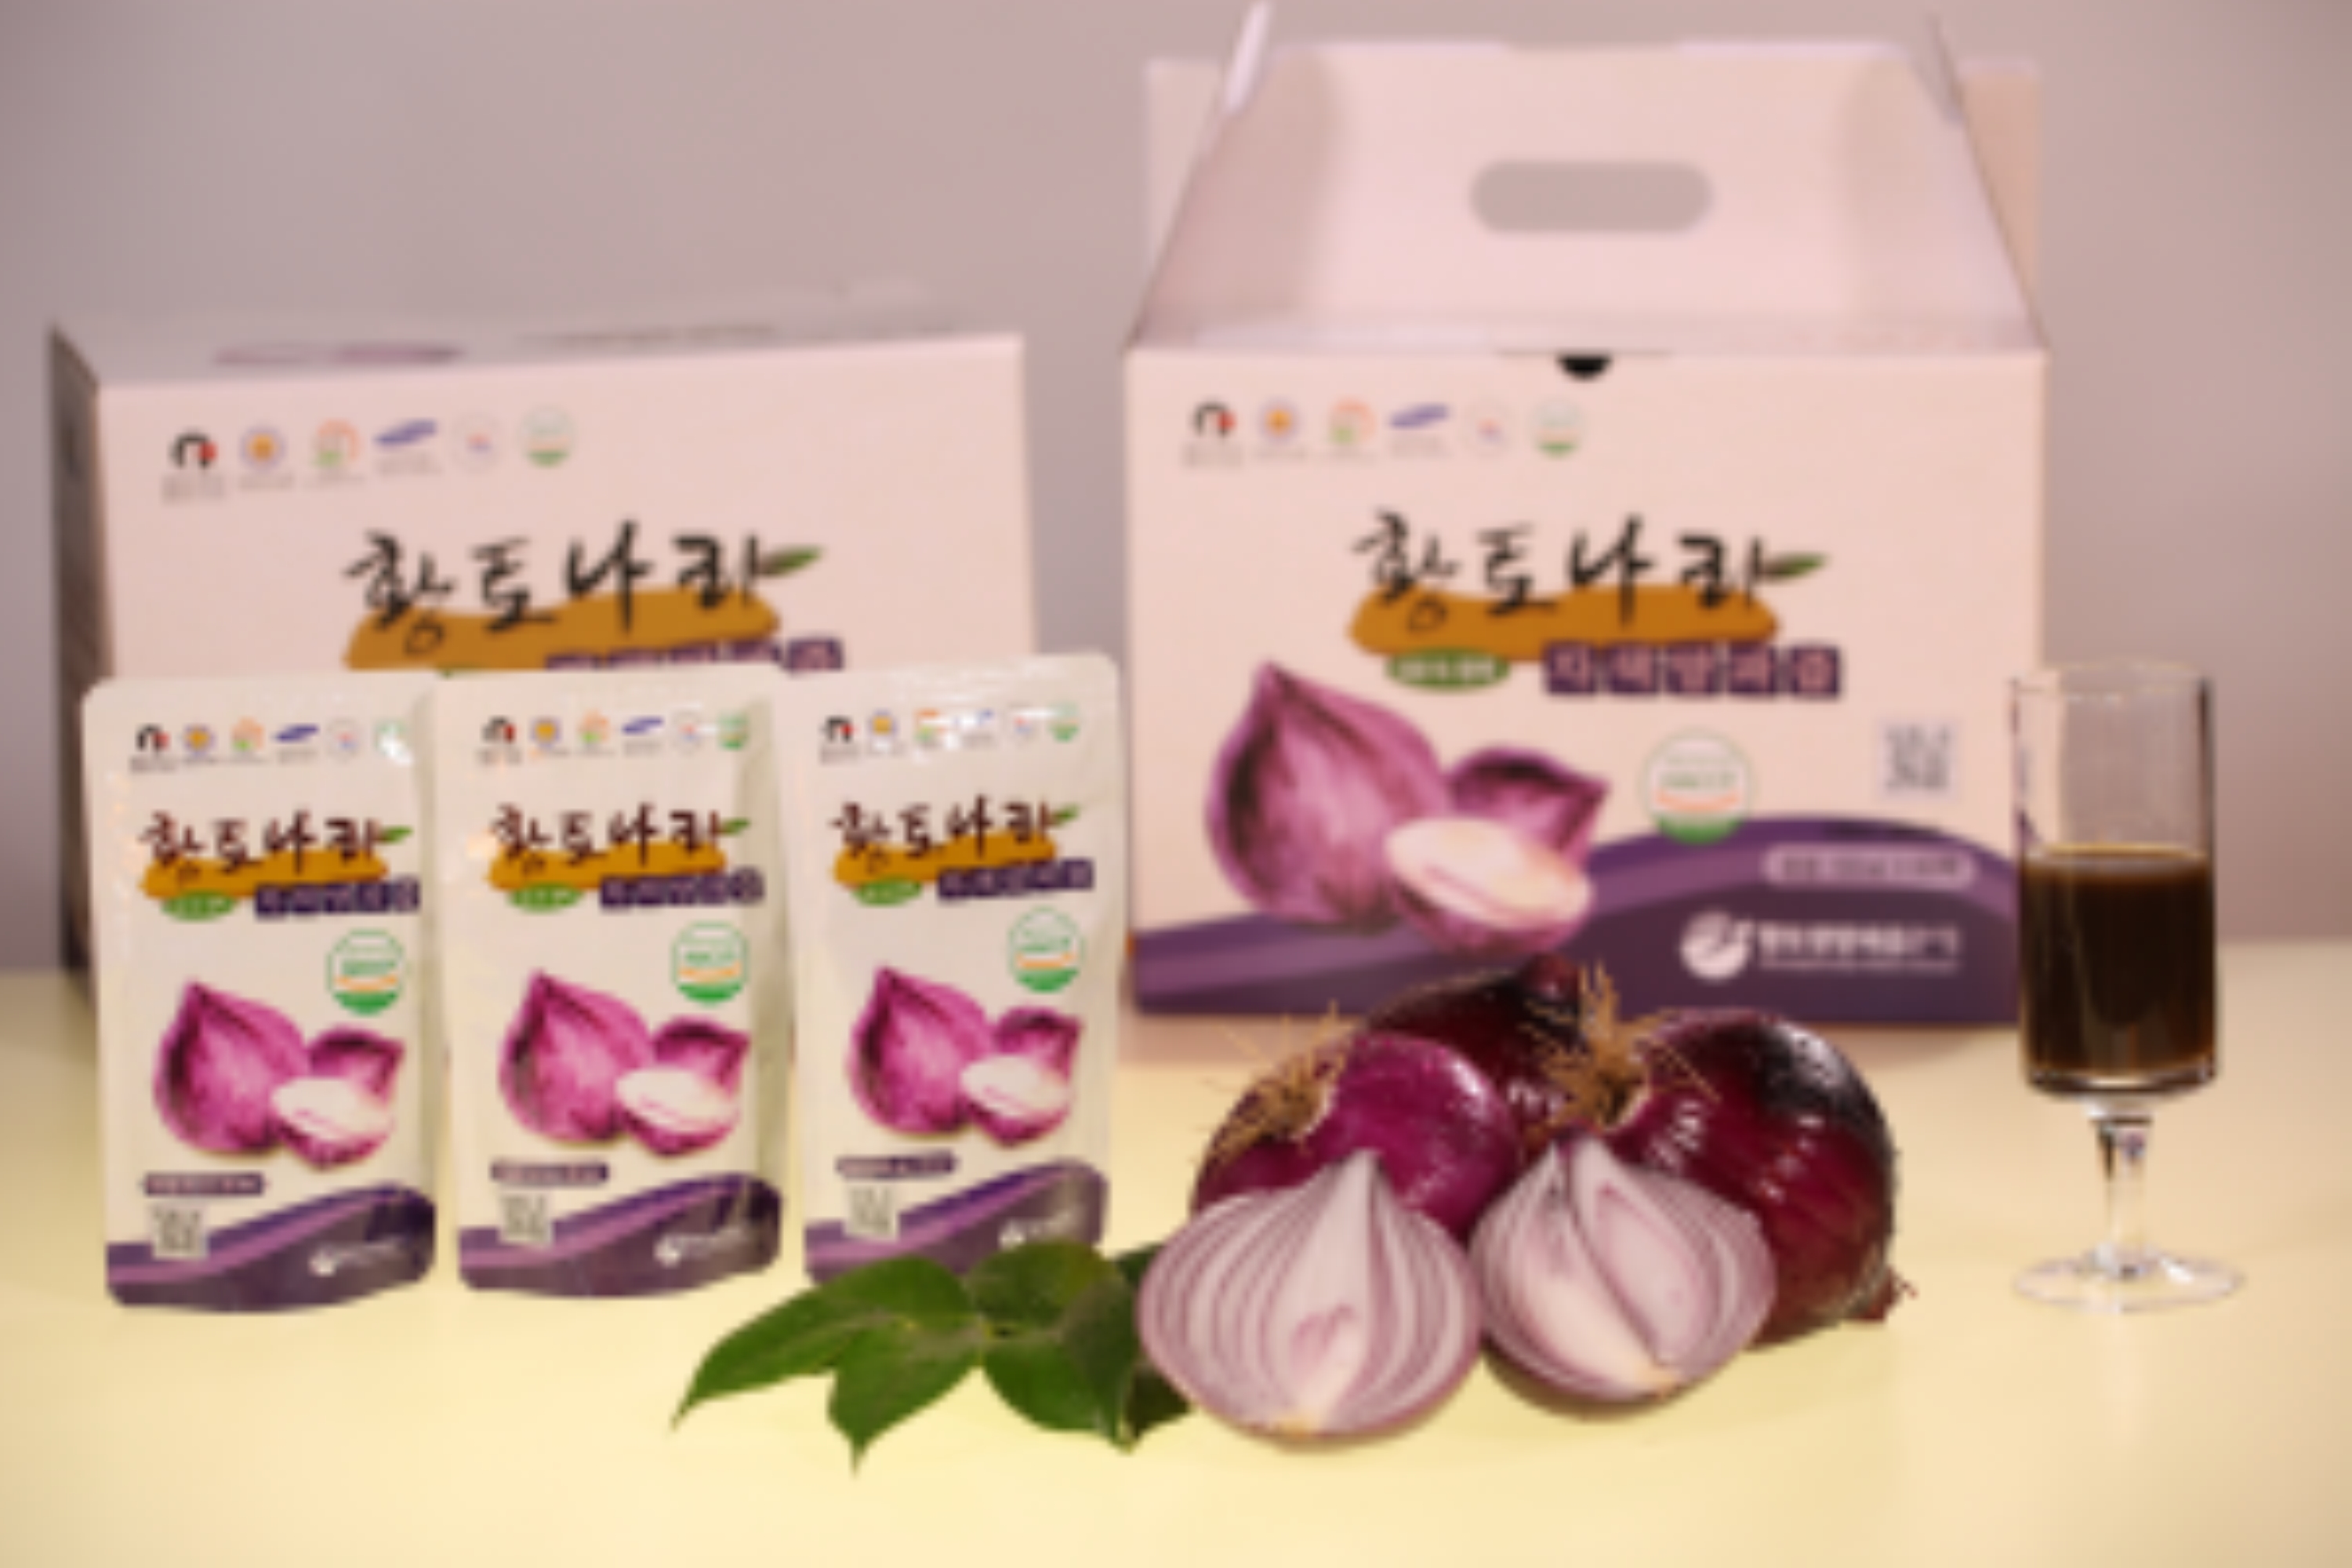 < Hwangtonara purple onion extracr > Using the purple onions produced Muan, known for the best taste...